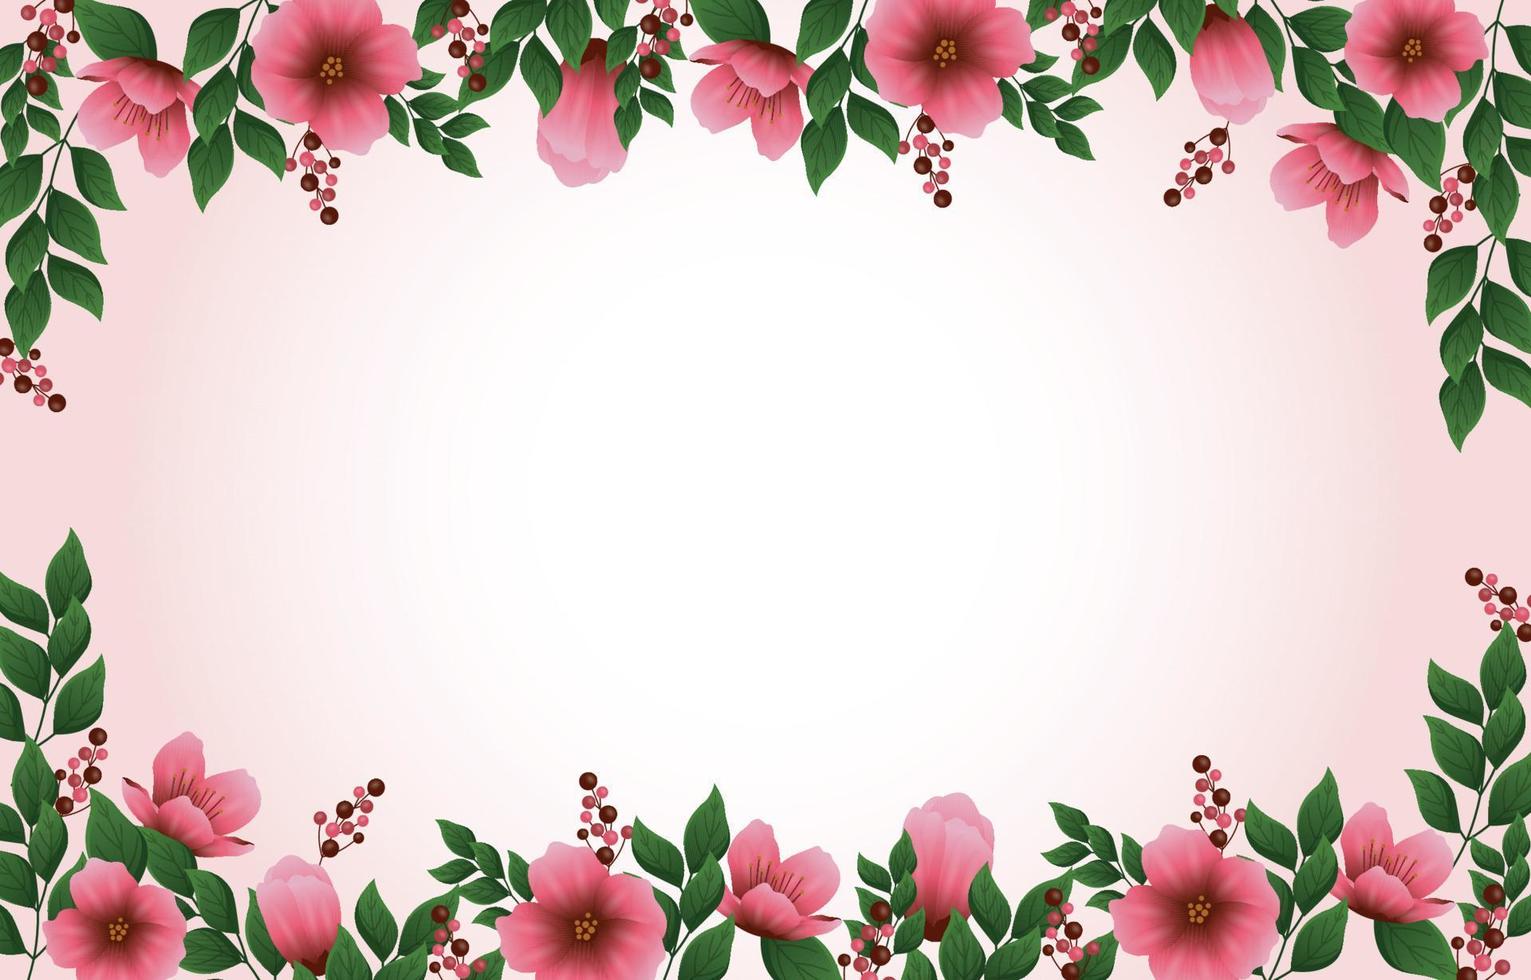 skön persika blomma blomma blommig tom Plats rektangel bakgrund vektor